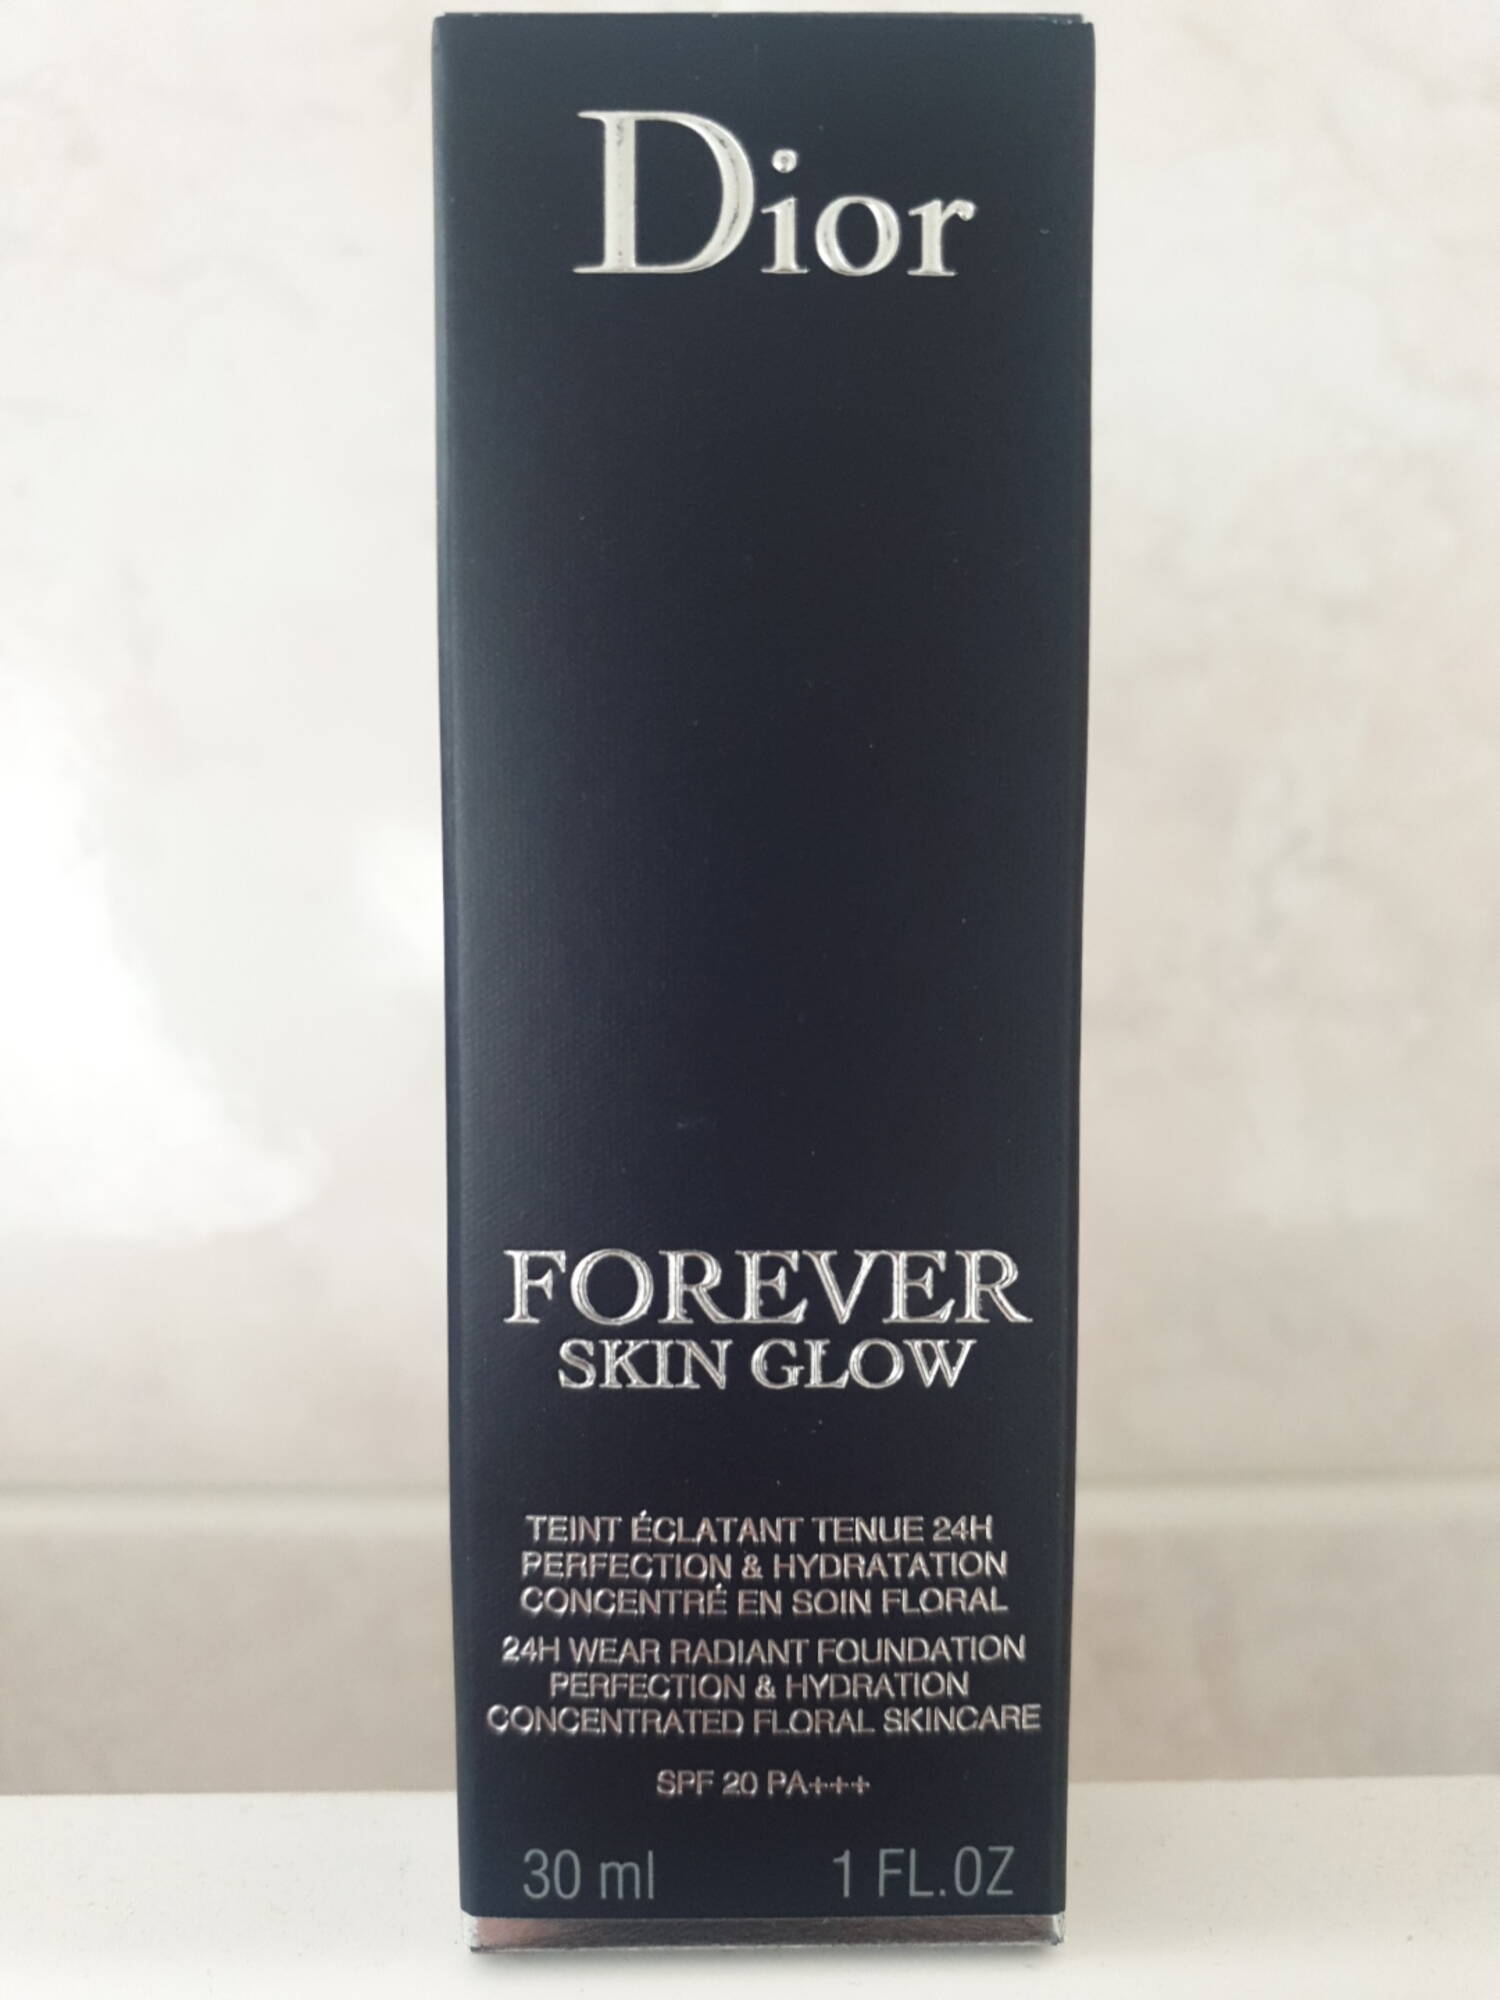 DIOR - Forever skin glow - Teint éclatant tenue 24h